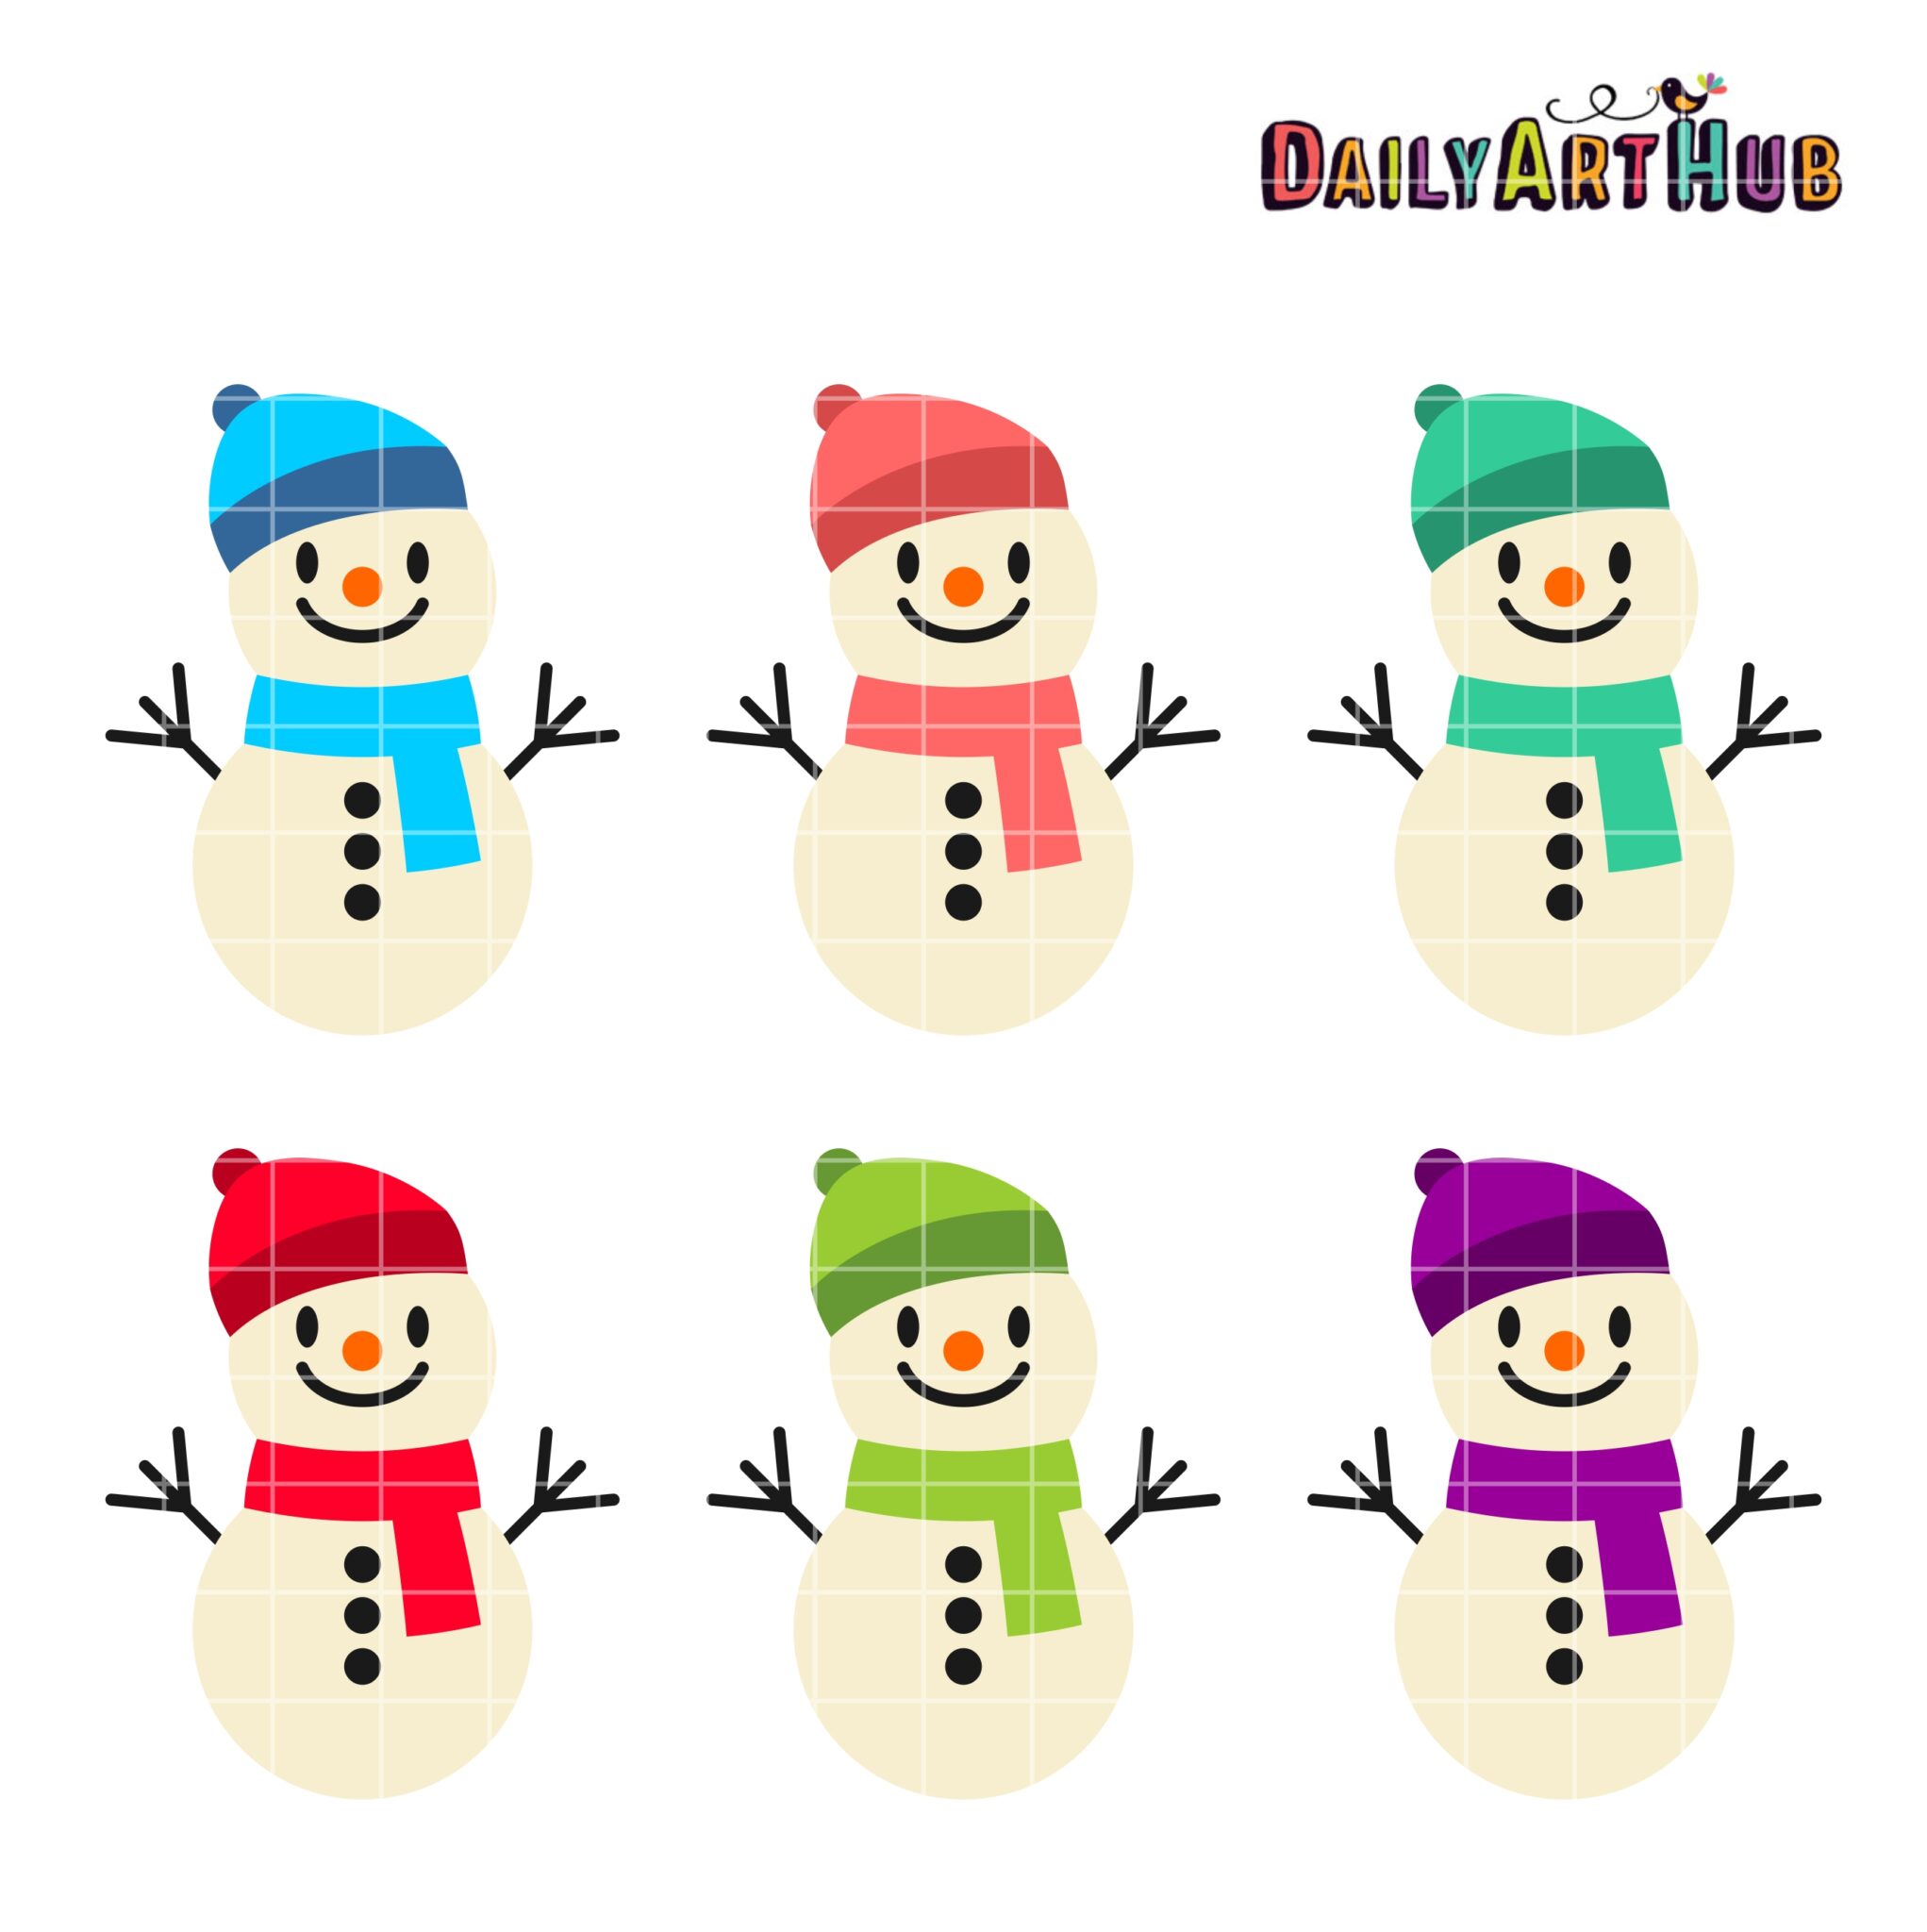 Funny Cute Snowmen Clip Art Set – Daily Art Hub // Graphics, Alphabets & SVG